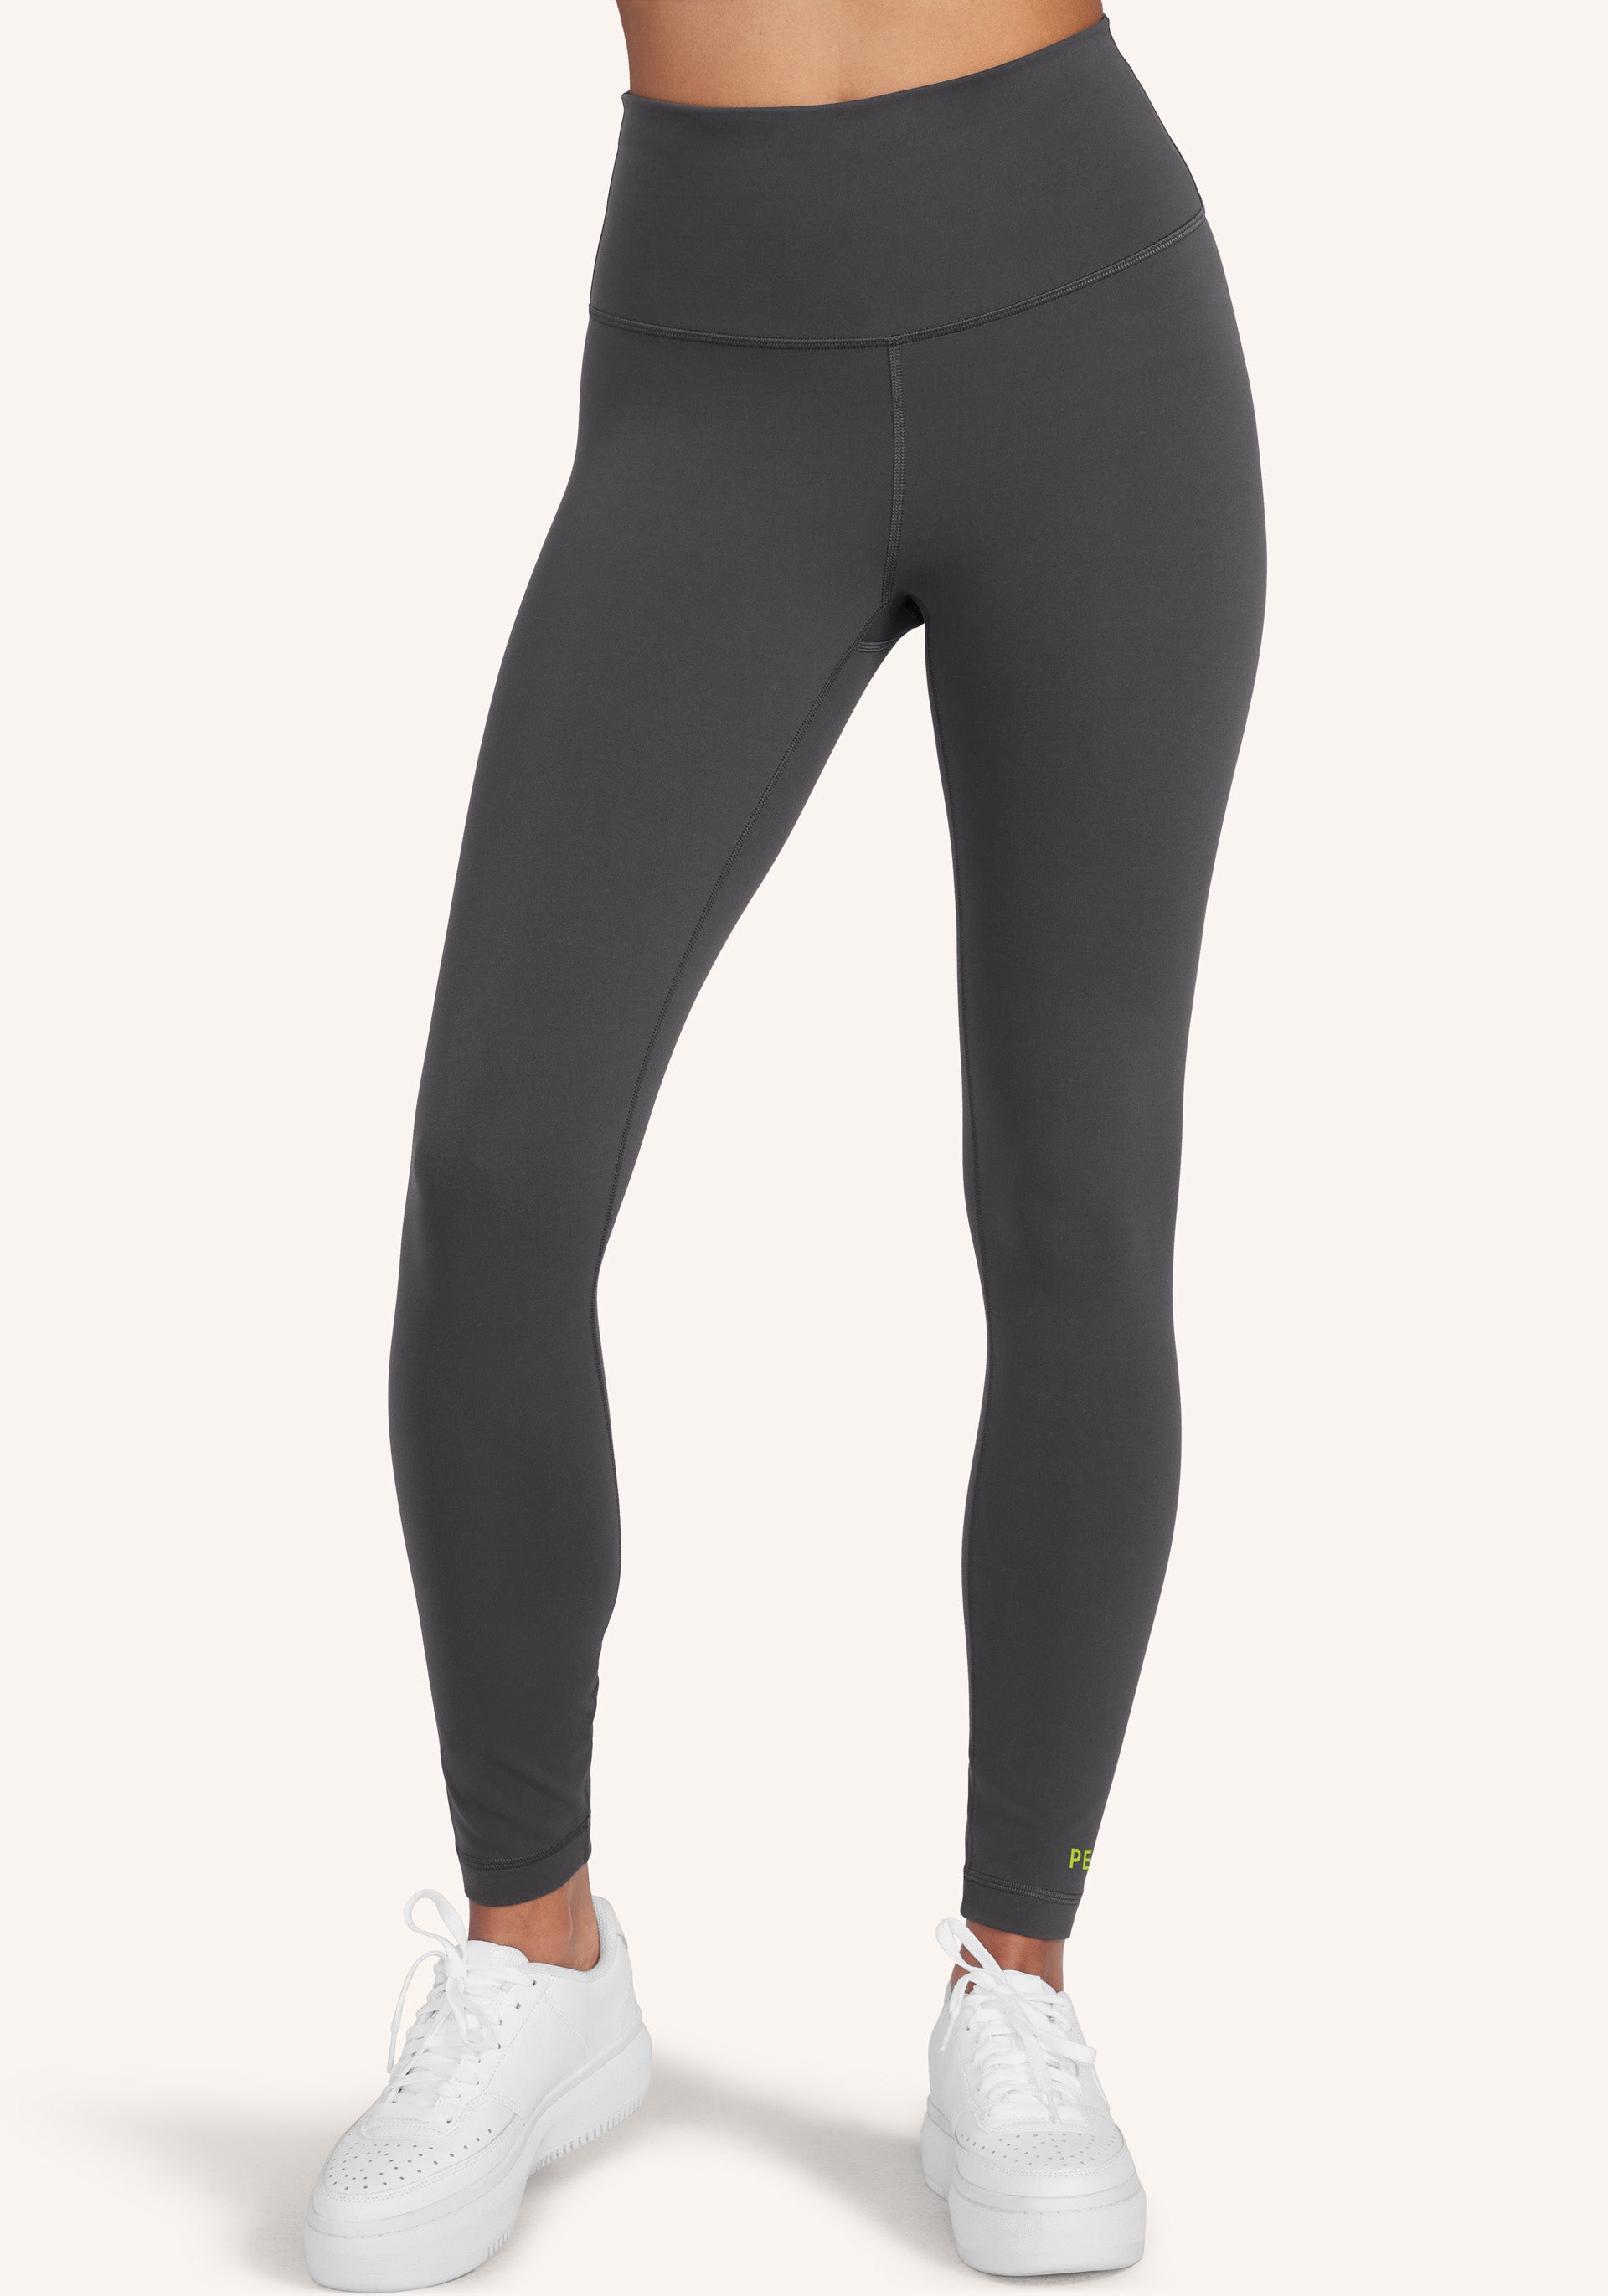 lululemon wunder train black leggings size 6 - Athletic apparel